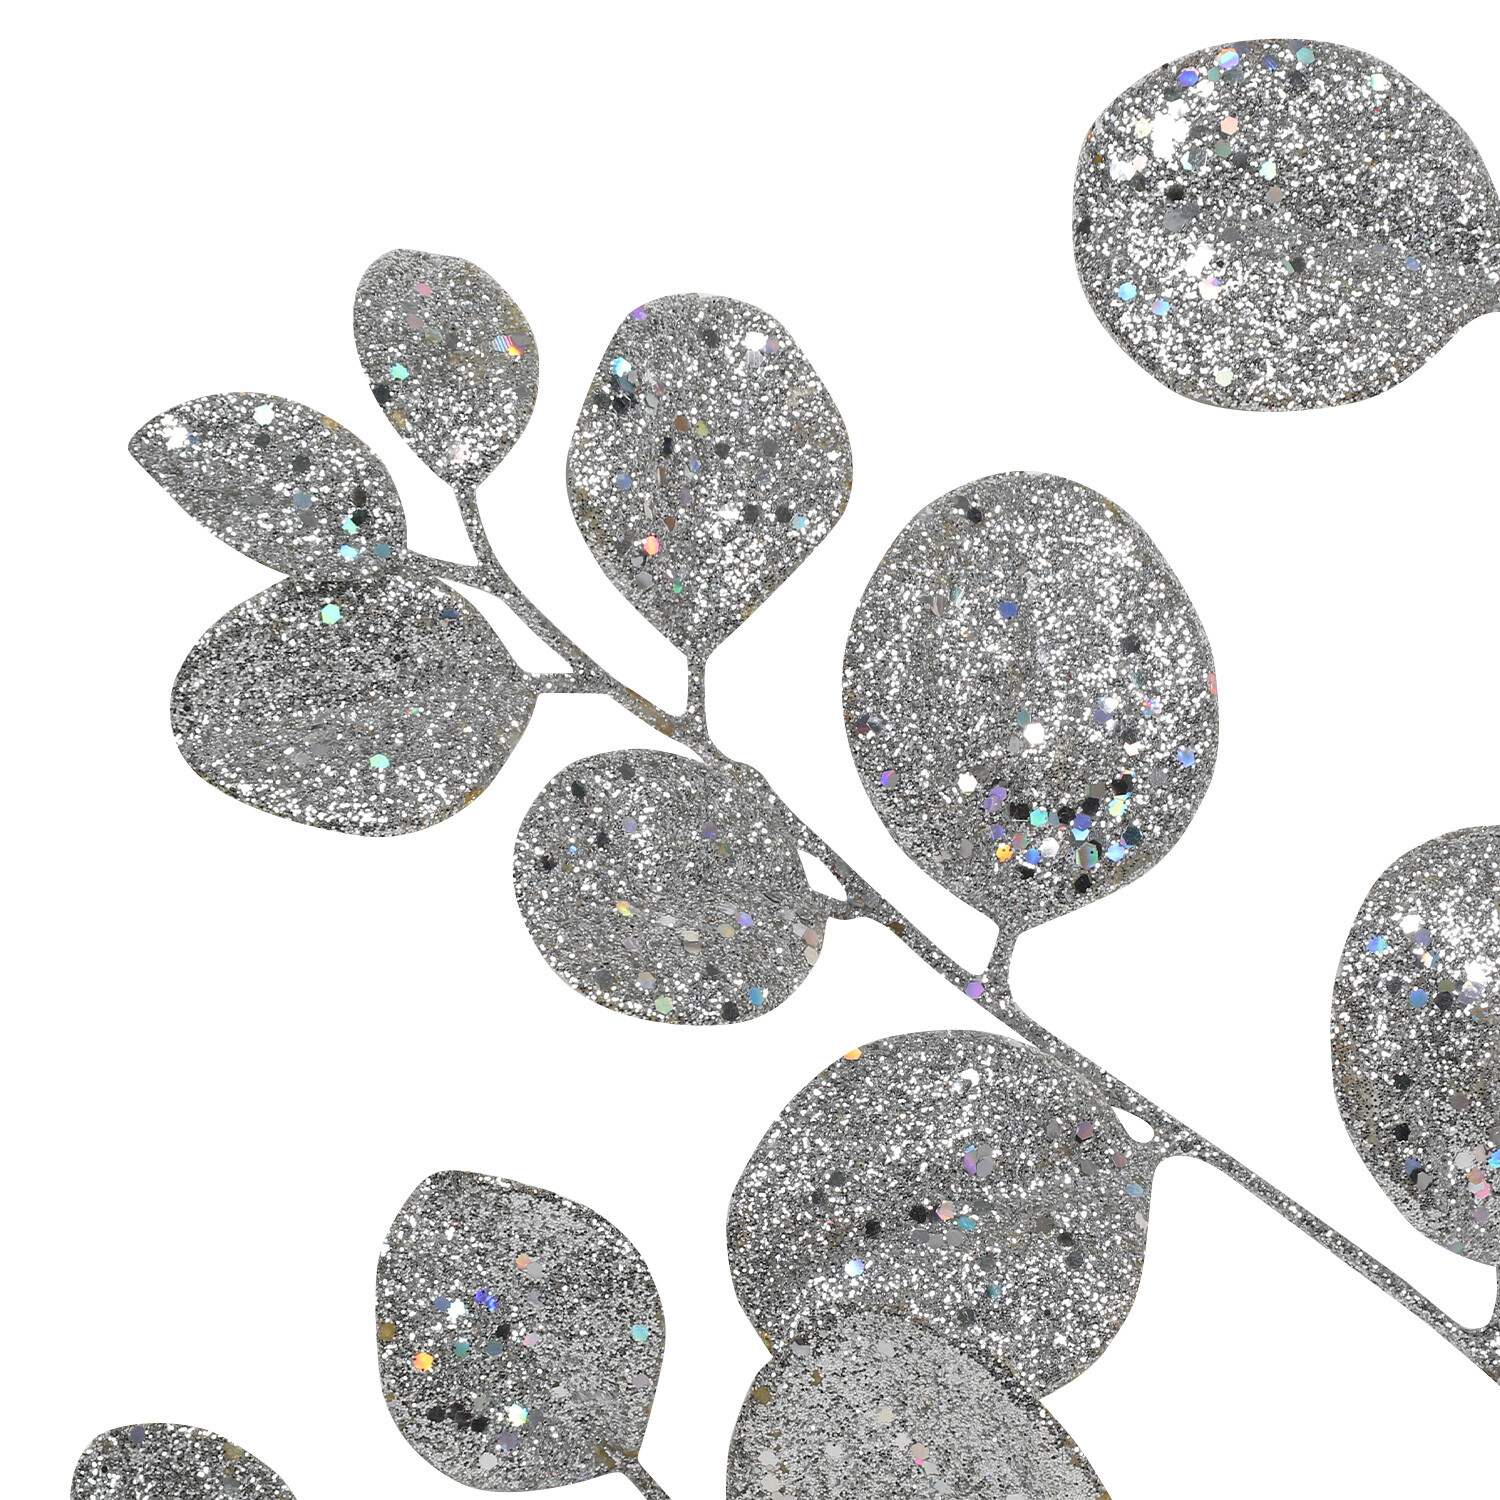 Single Glitter Eucalyptus Pick in Assorted styles Image 2